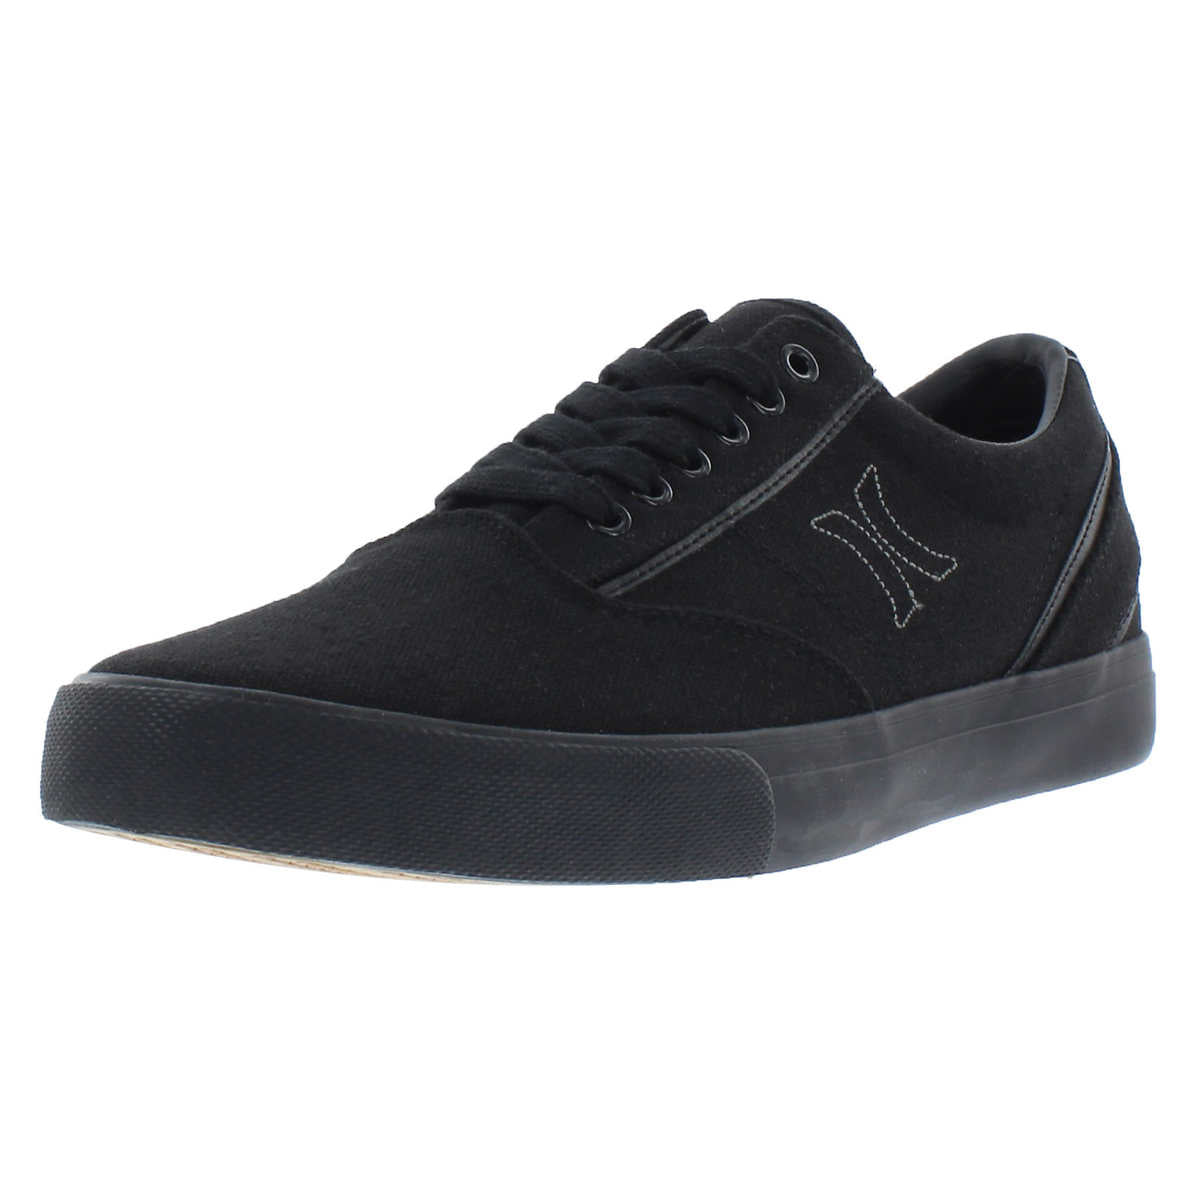 Hurley Men's Arlo Skate Shoe - Fashion Casual shoes for Men